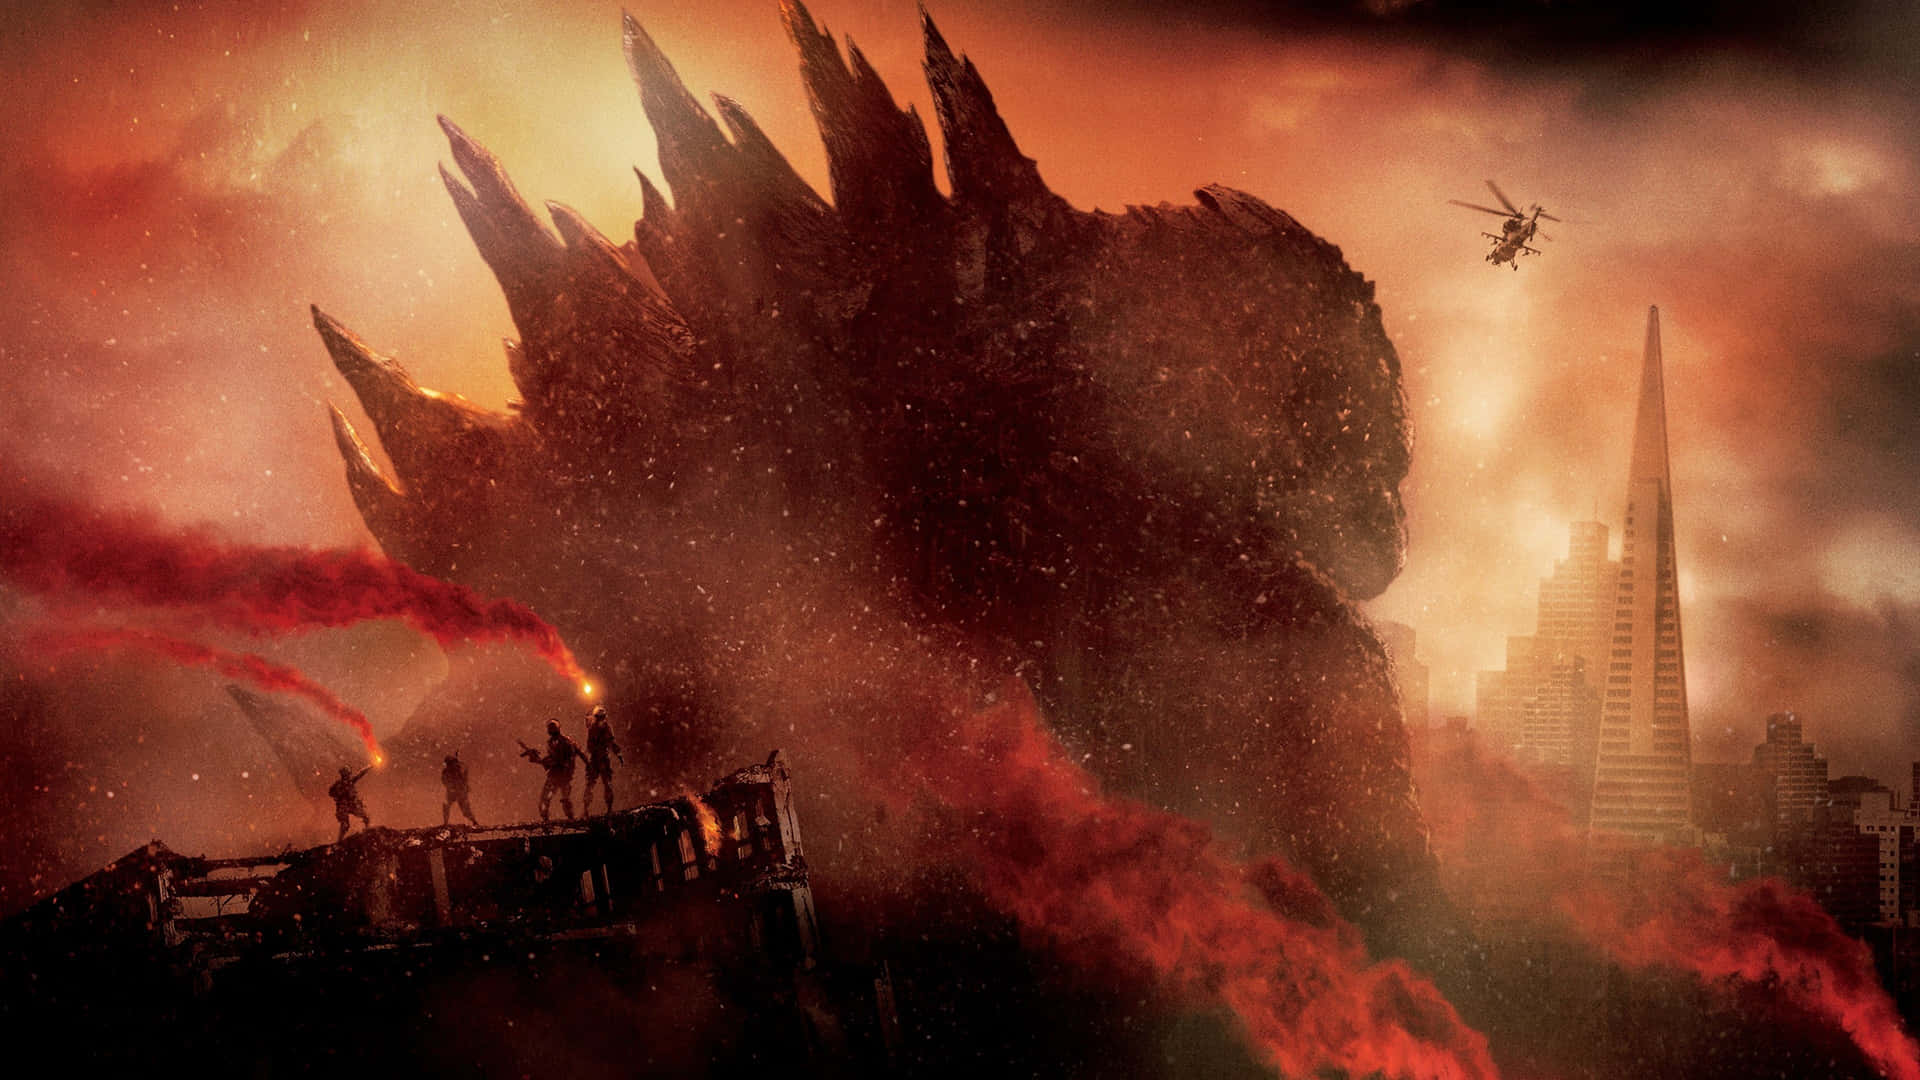 Ladden Frygtindgydende Godzilla Slippe Løs.